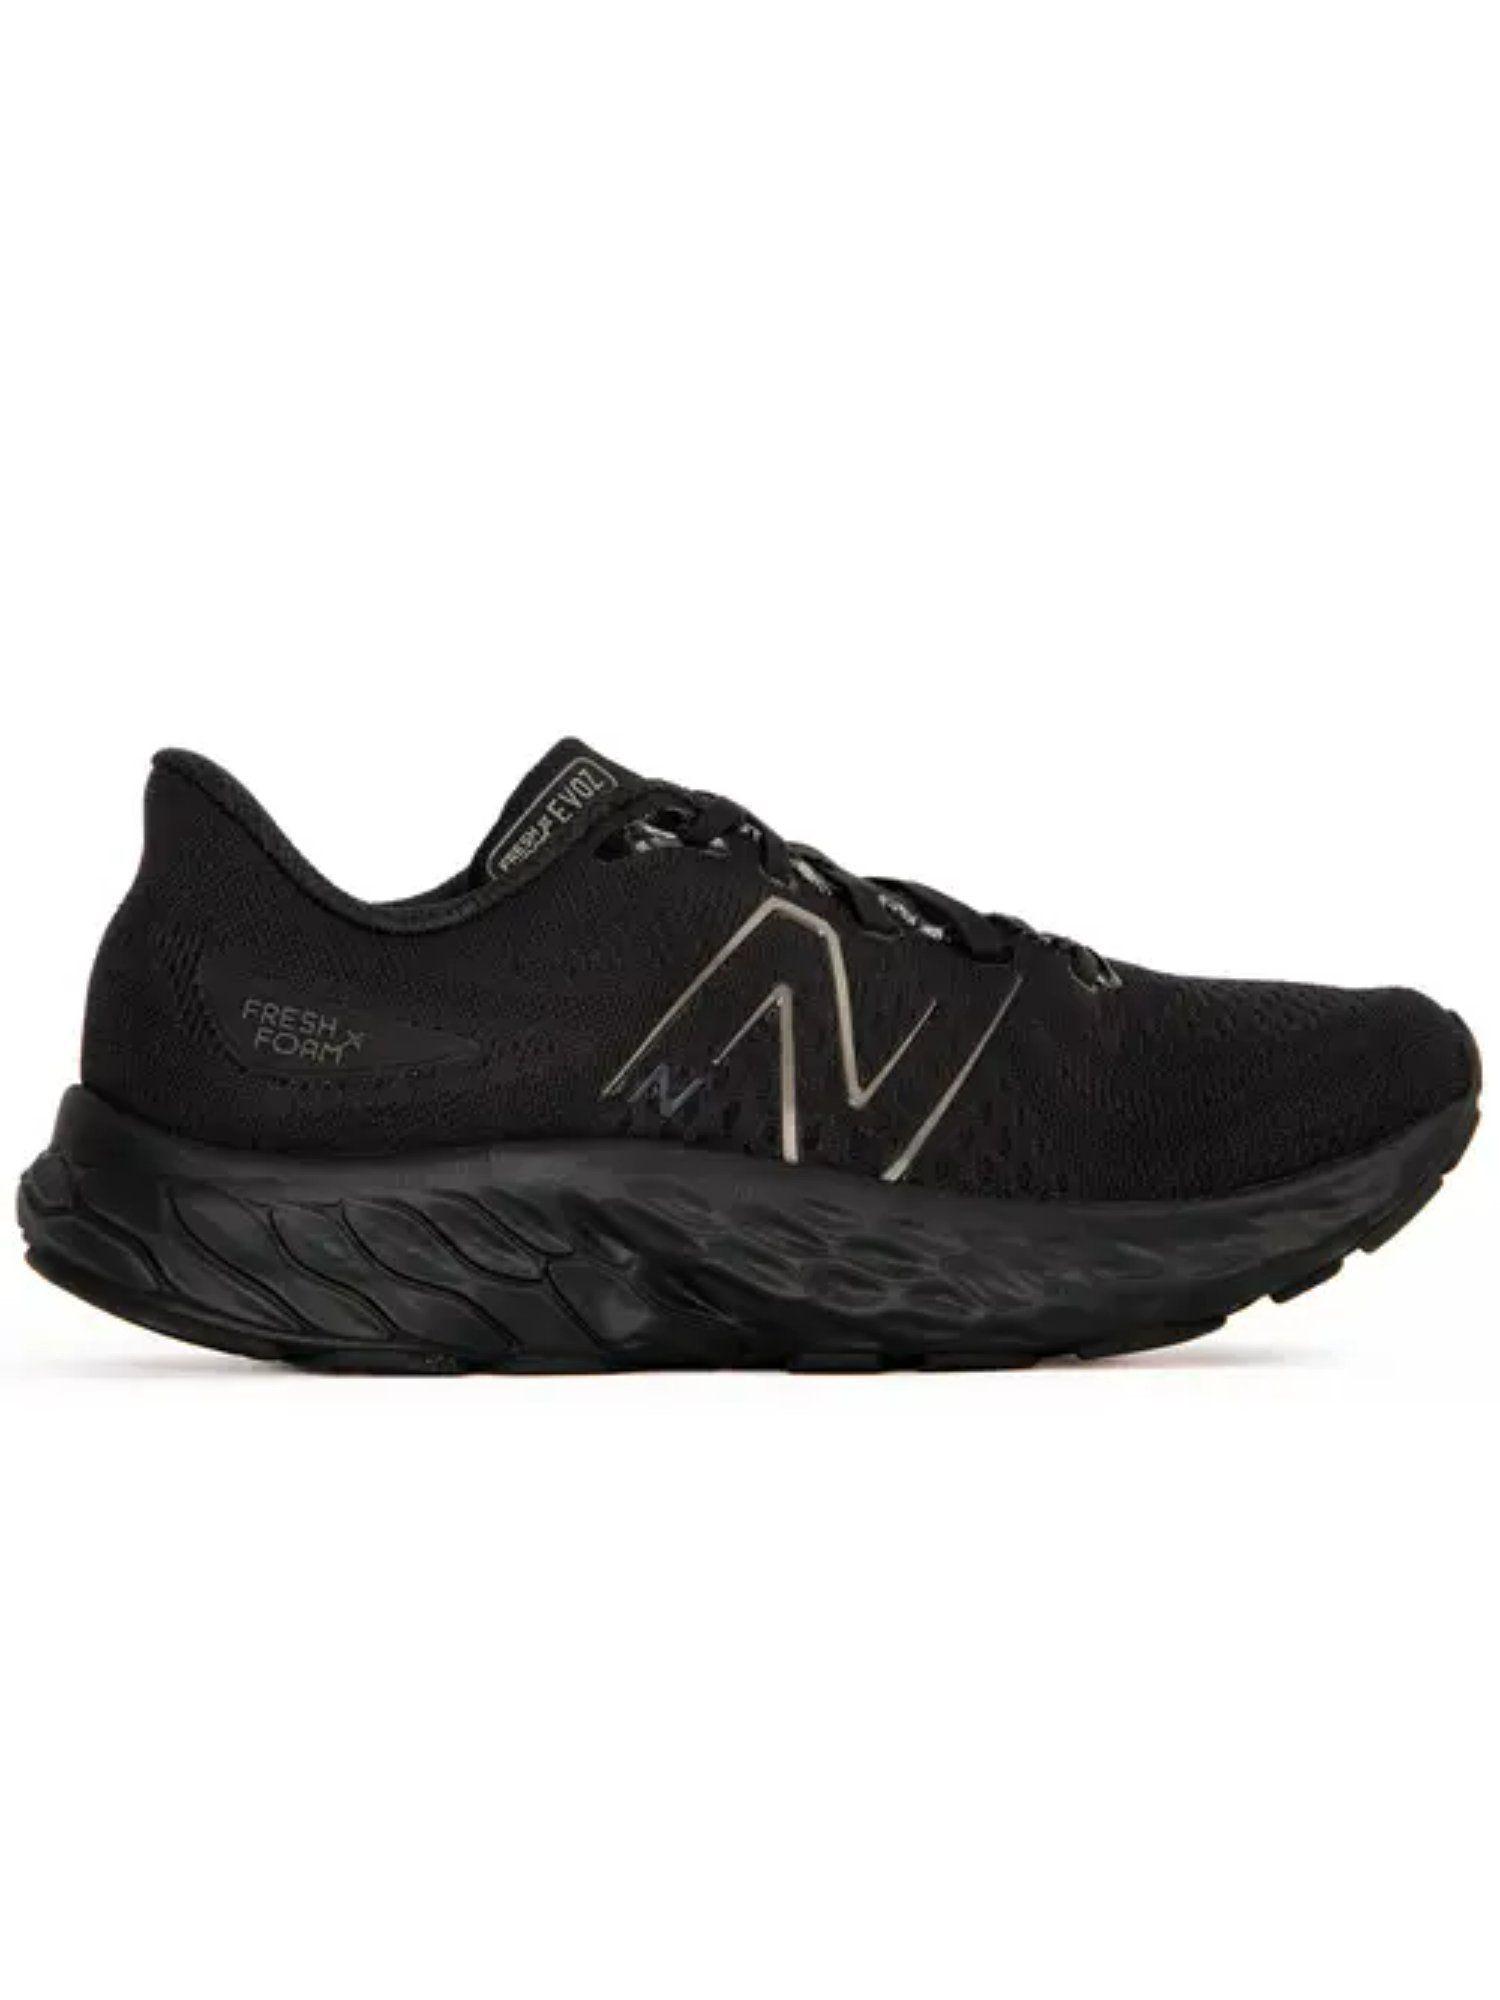 men evoz black running shoes